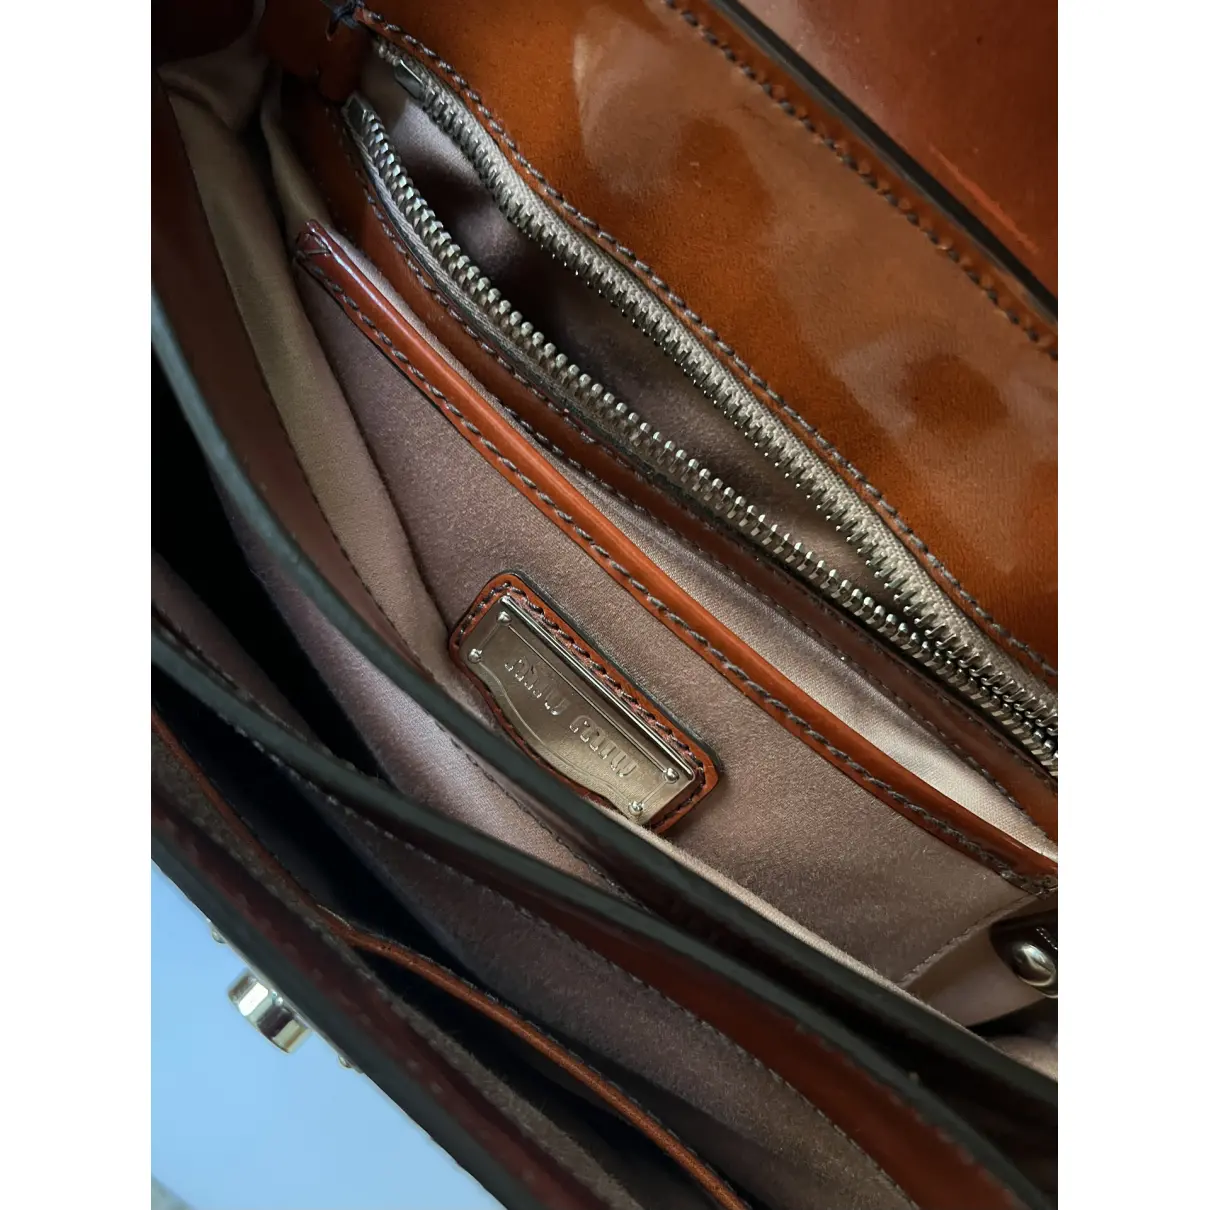 Buy Miu Miu Patent leather handbag online